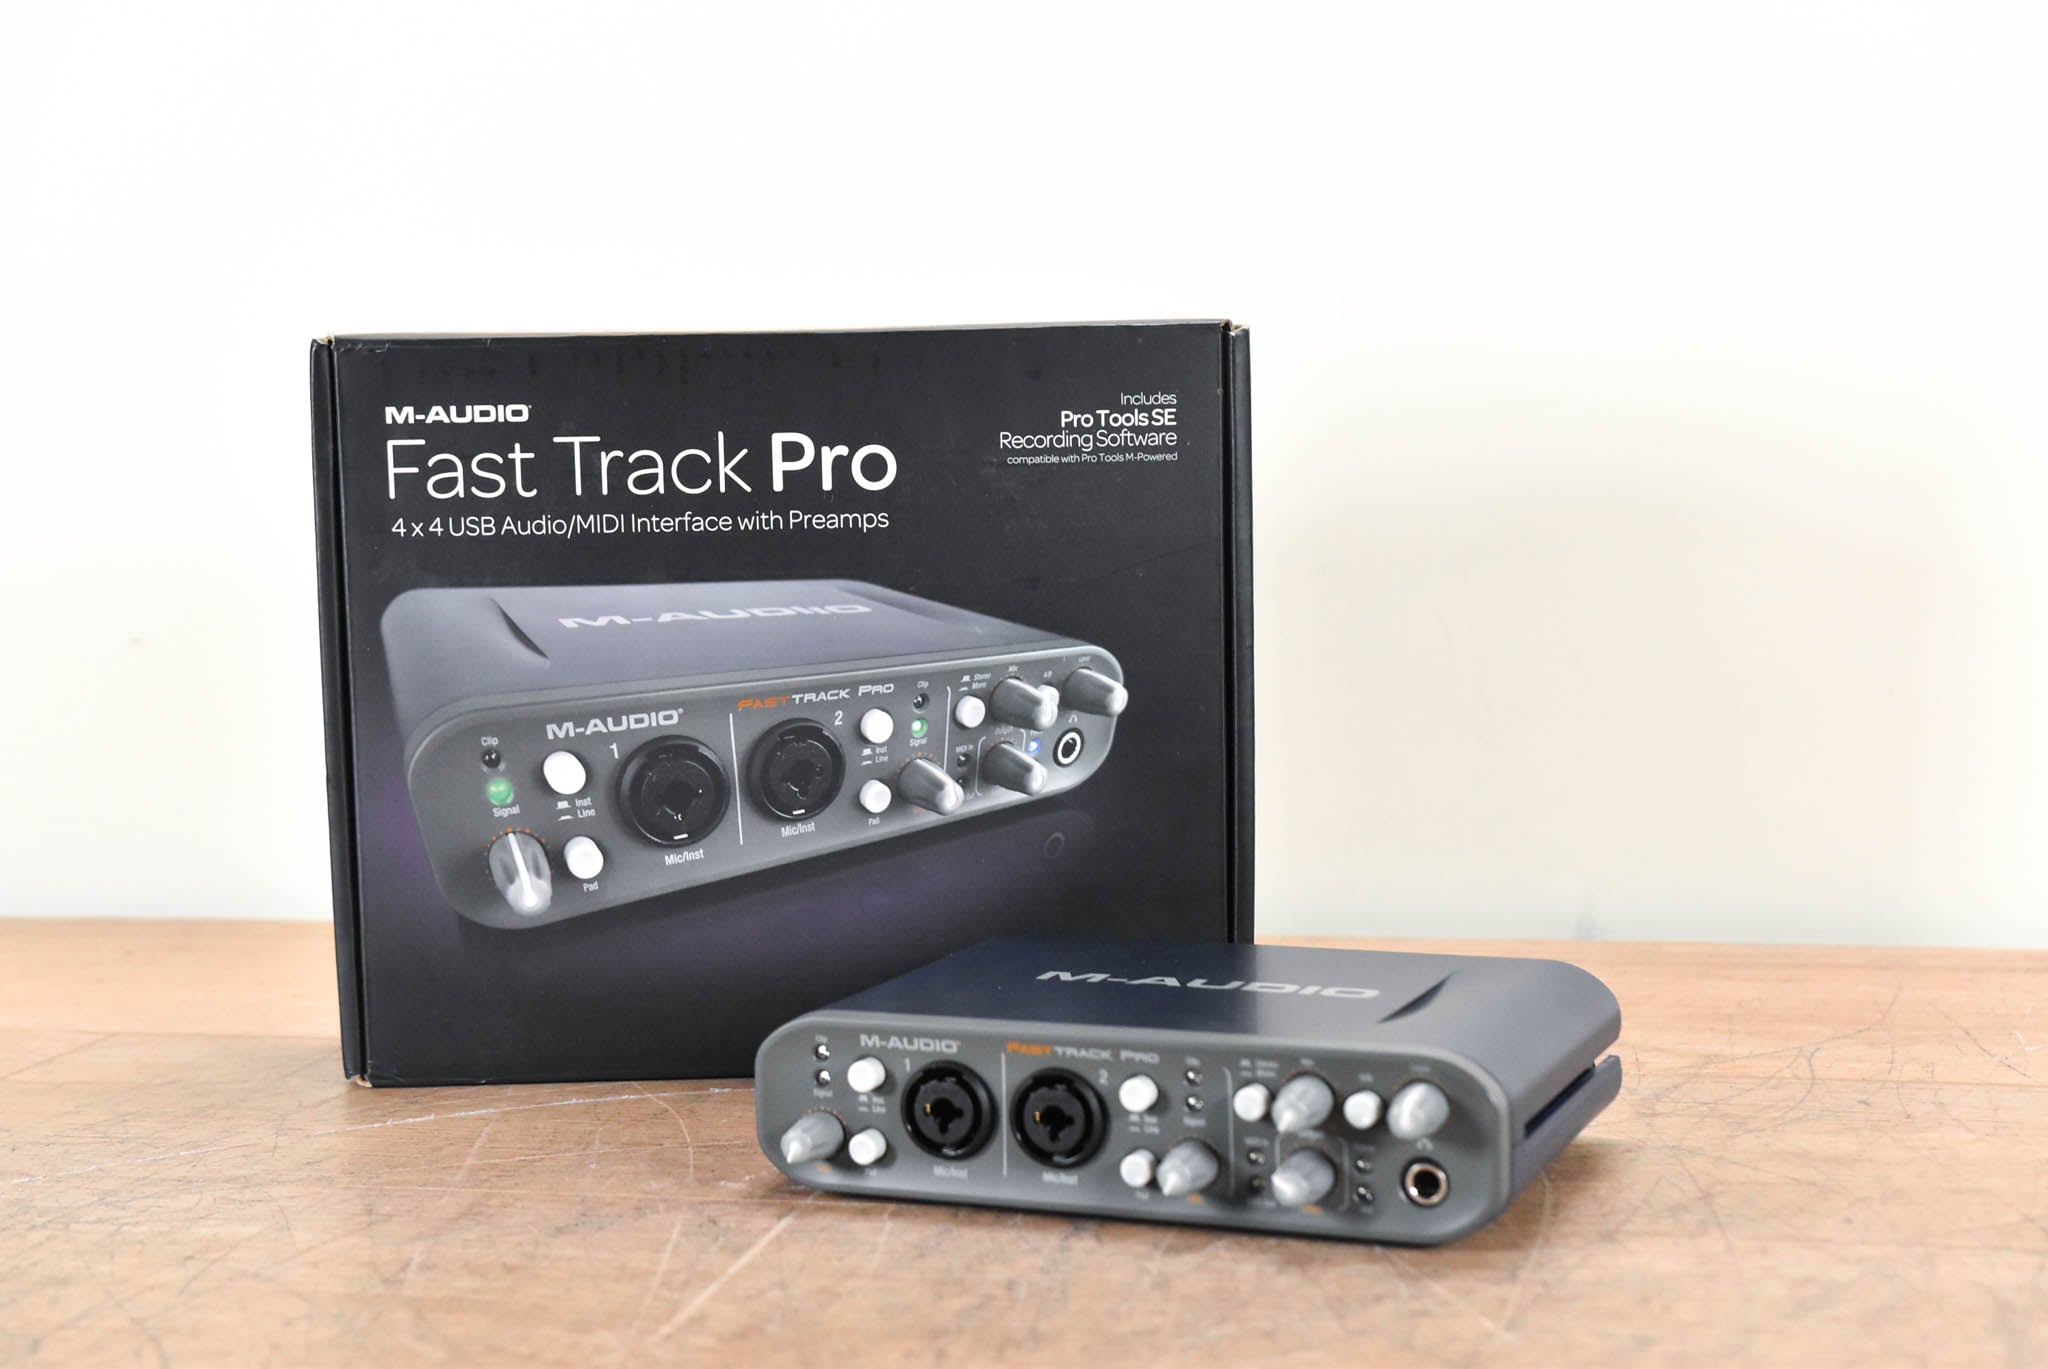 M-Audio Fast Track Pro Mobile 4x4 USB Audio/MIDI Interface